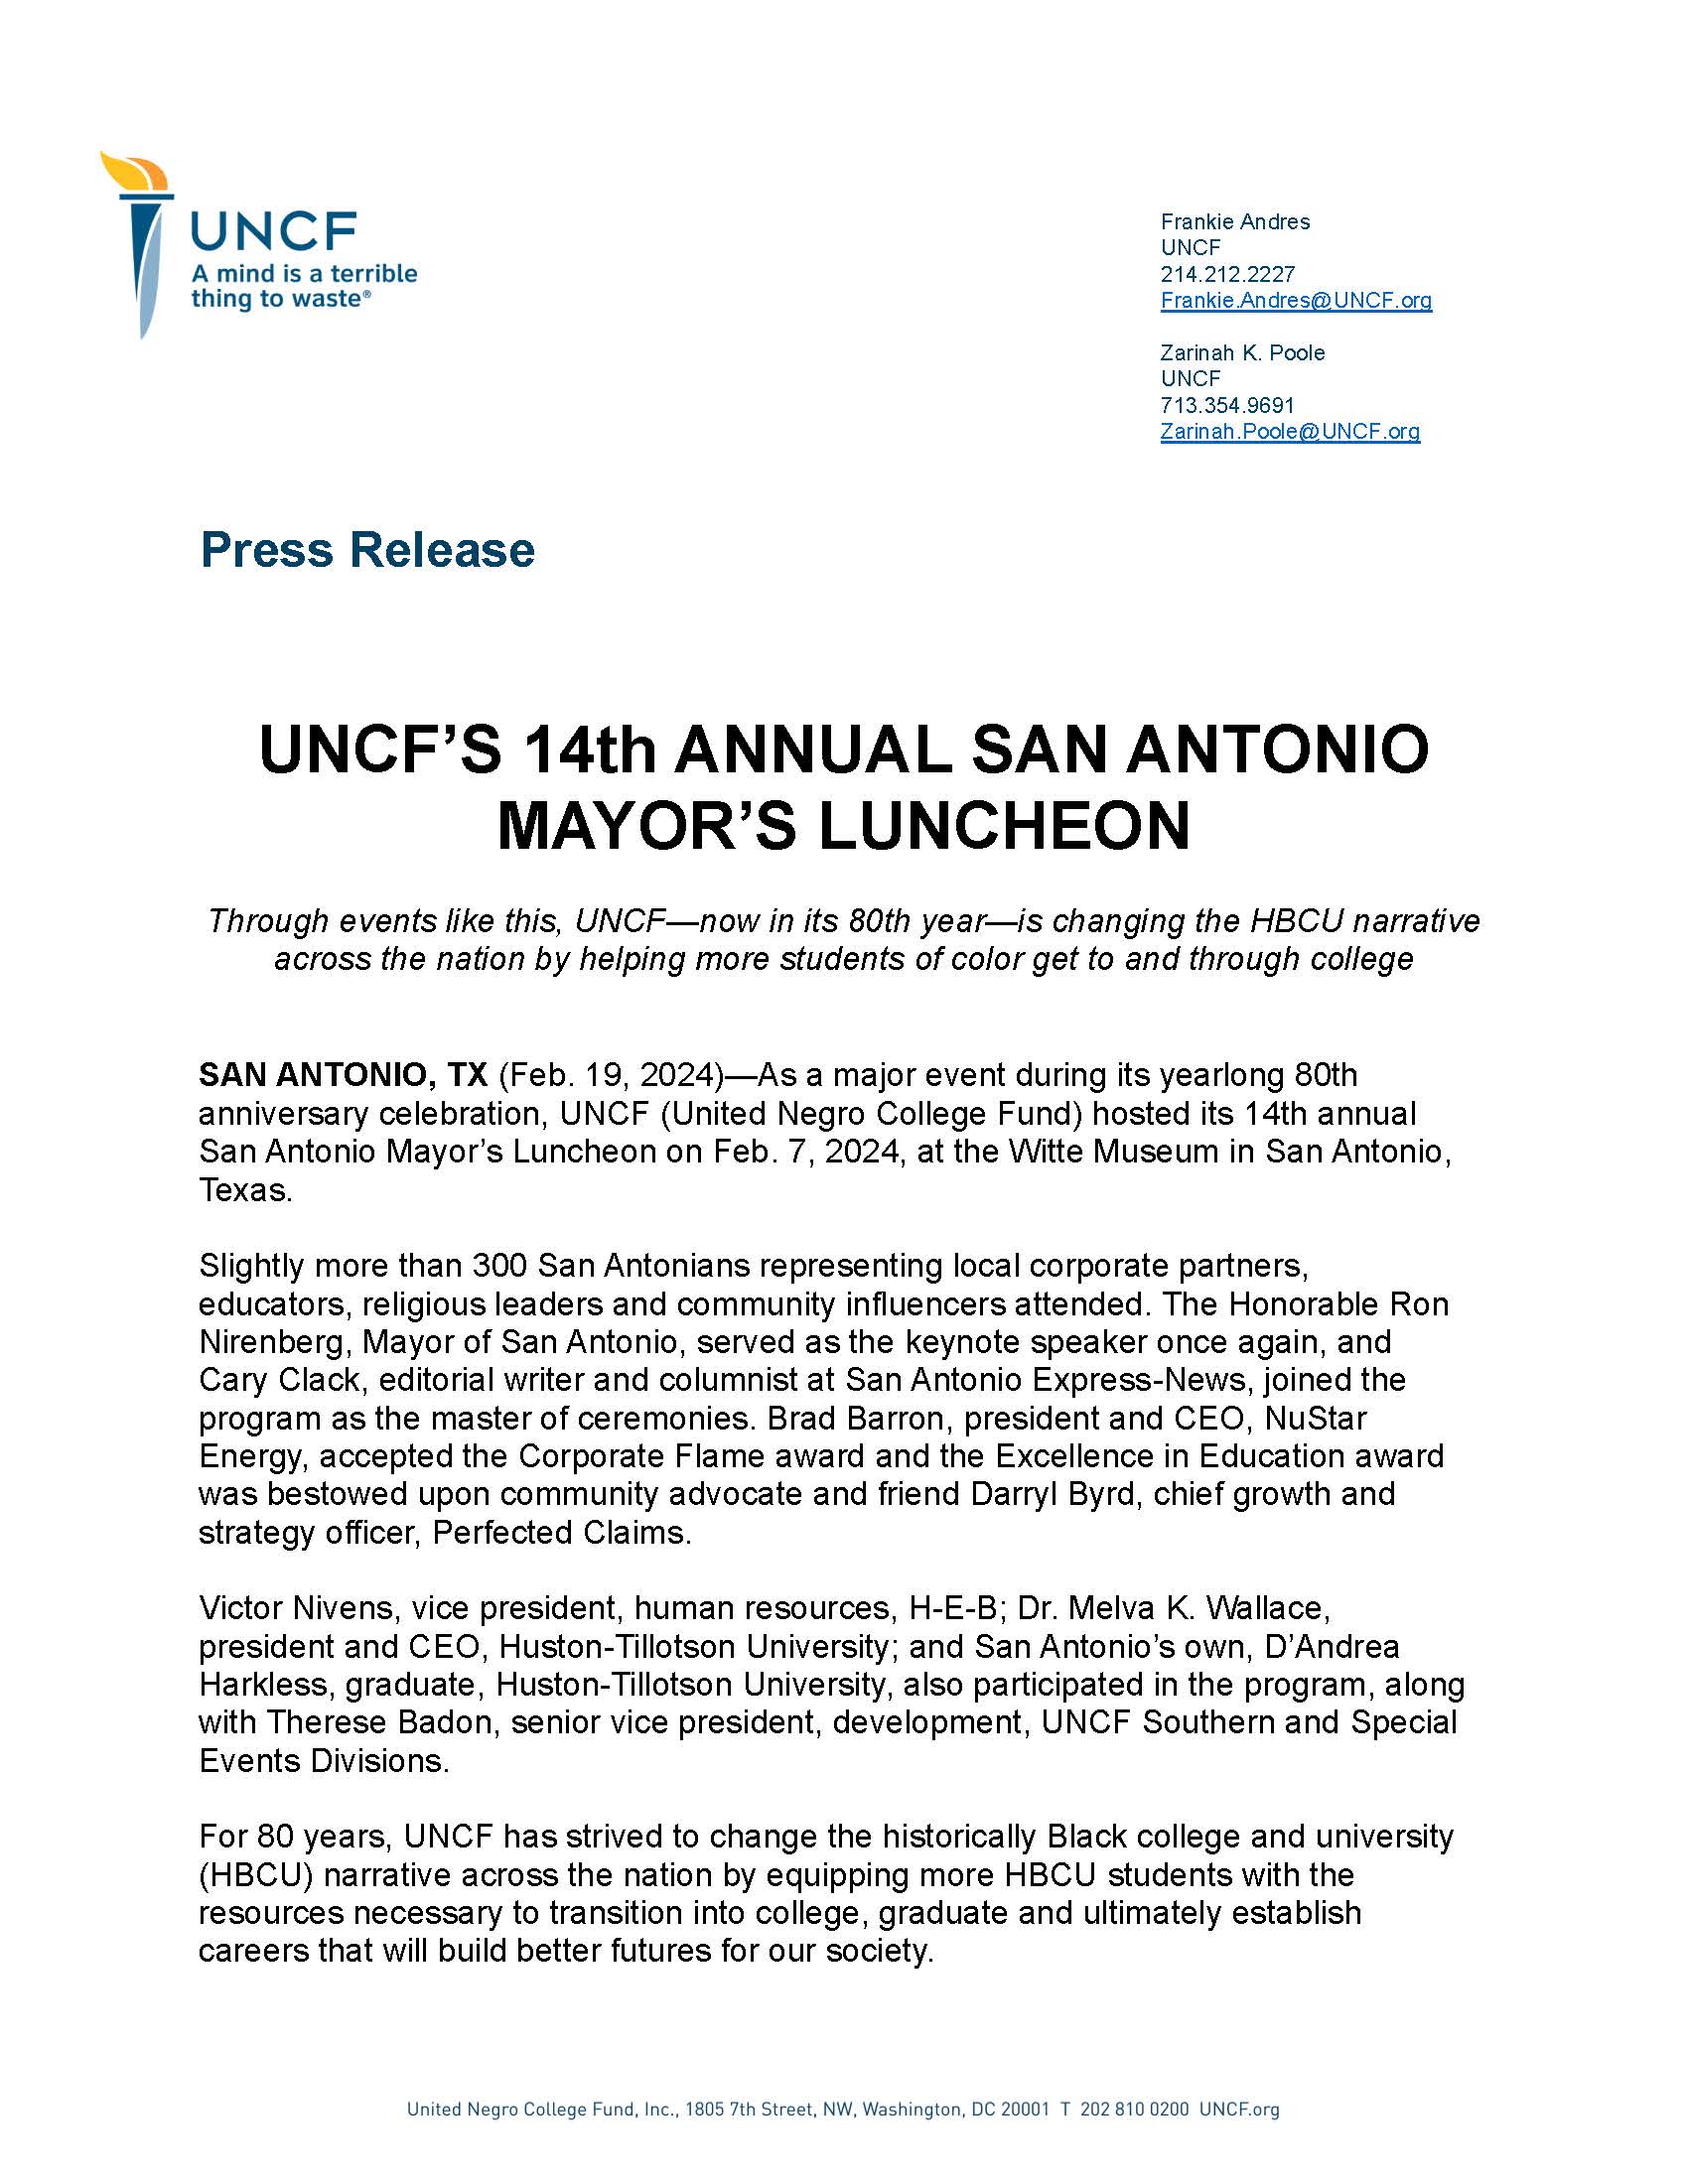 San Antonio Mayors Luncheon Press-Release